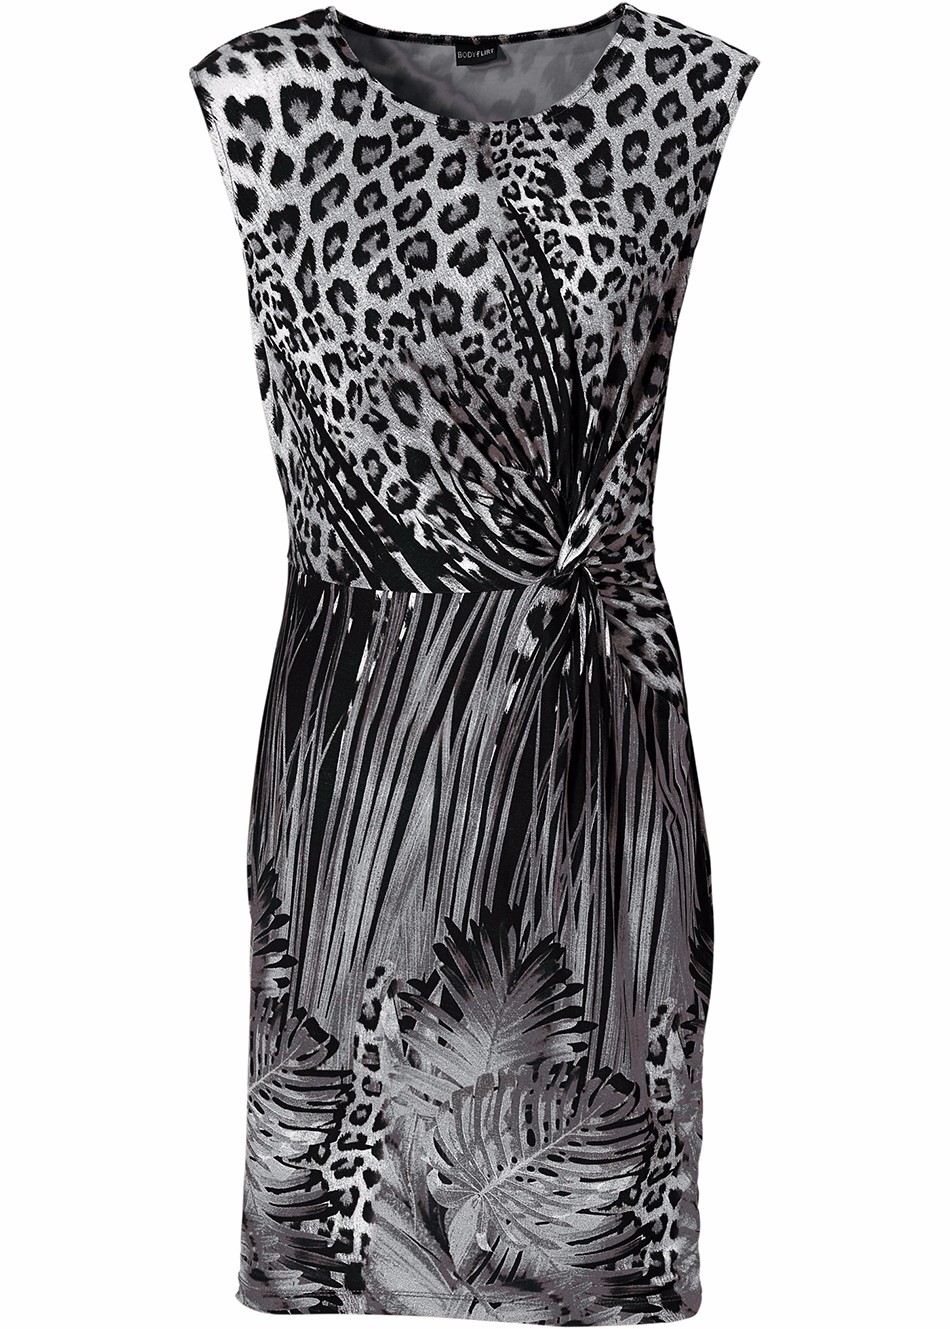 Kink-Summer-Dress-Women-European-Leopard-Print-Bodycon-Dress-Women-2017-New-Elegant-Casual-Sheath-Pe-32705333185